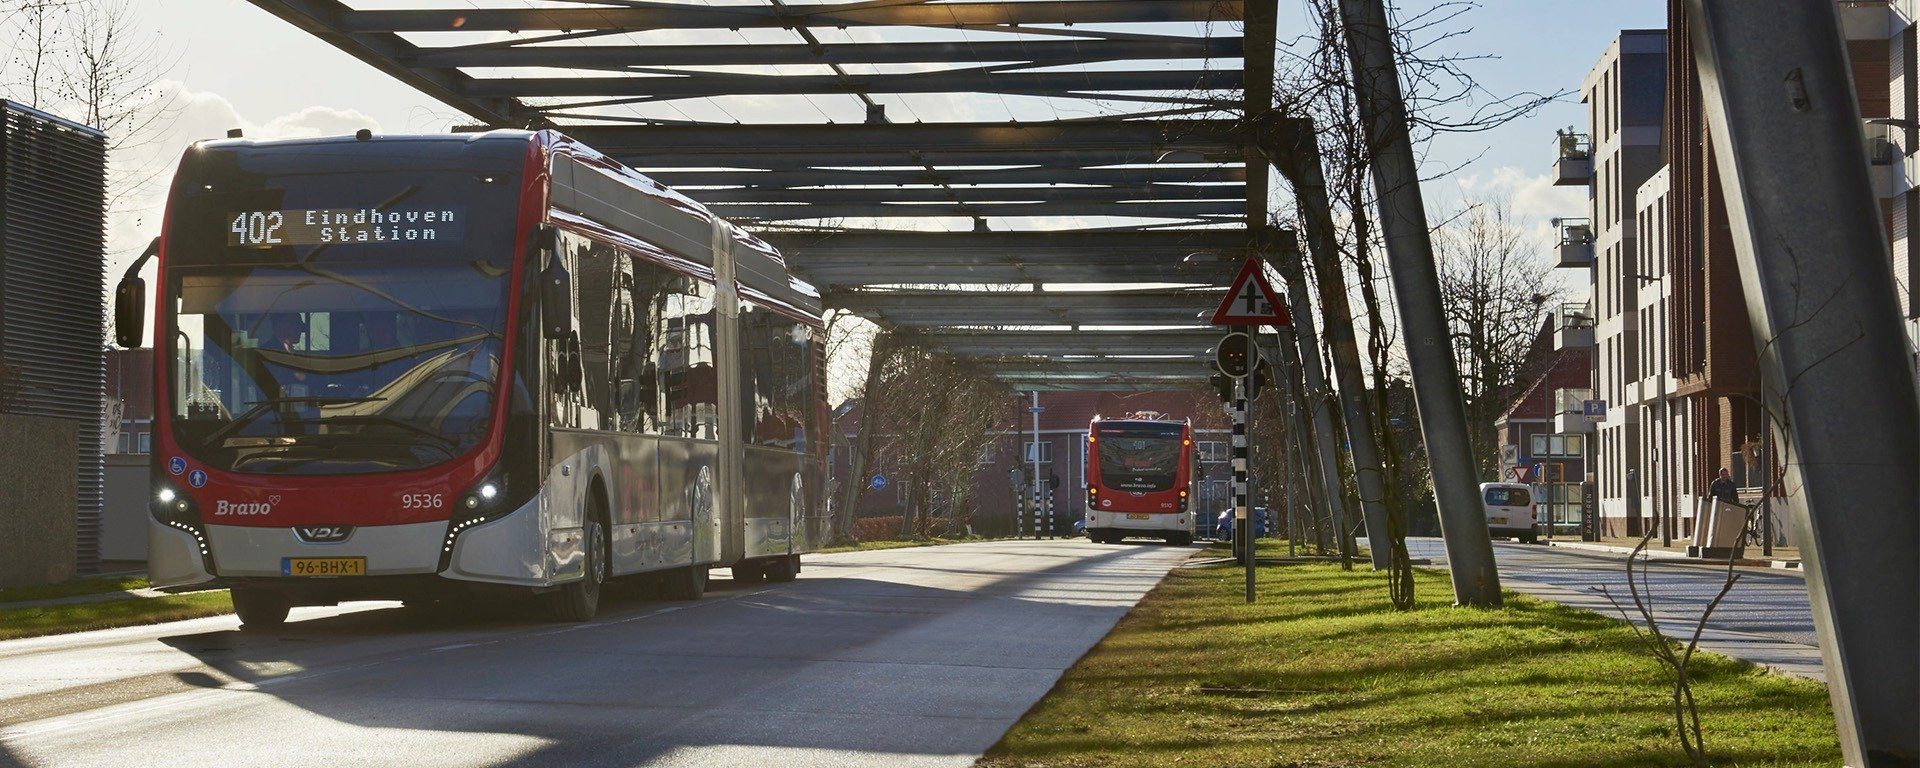 Bus hybride Eindhoven Pays-Bas